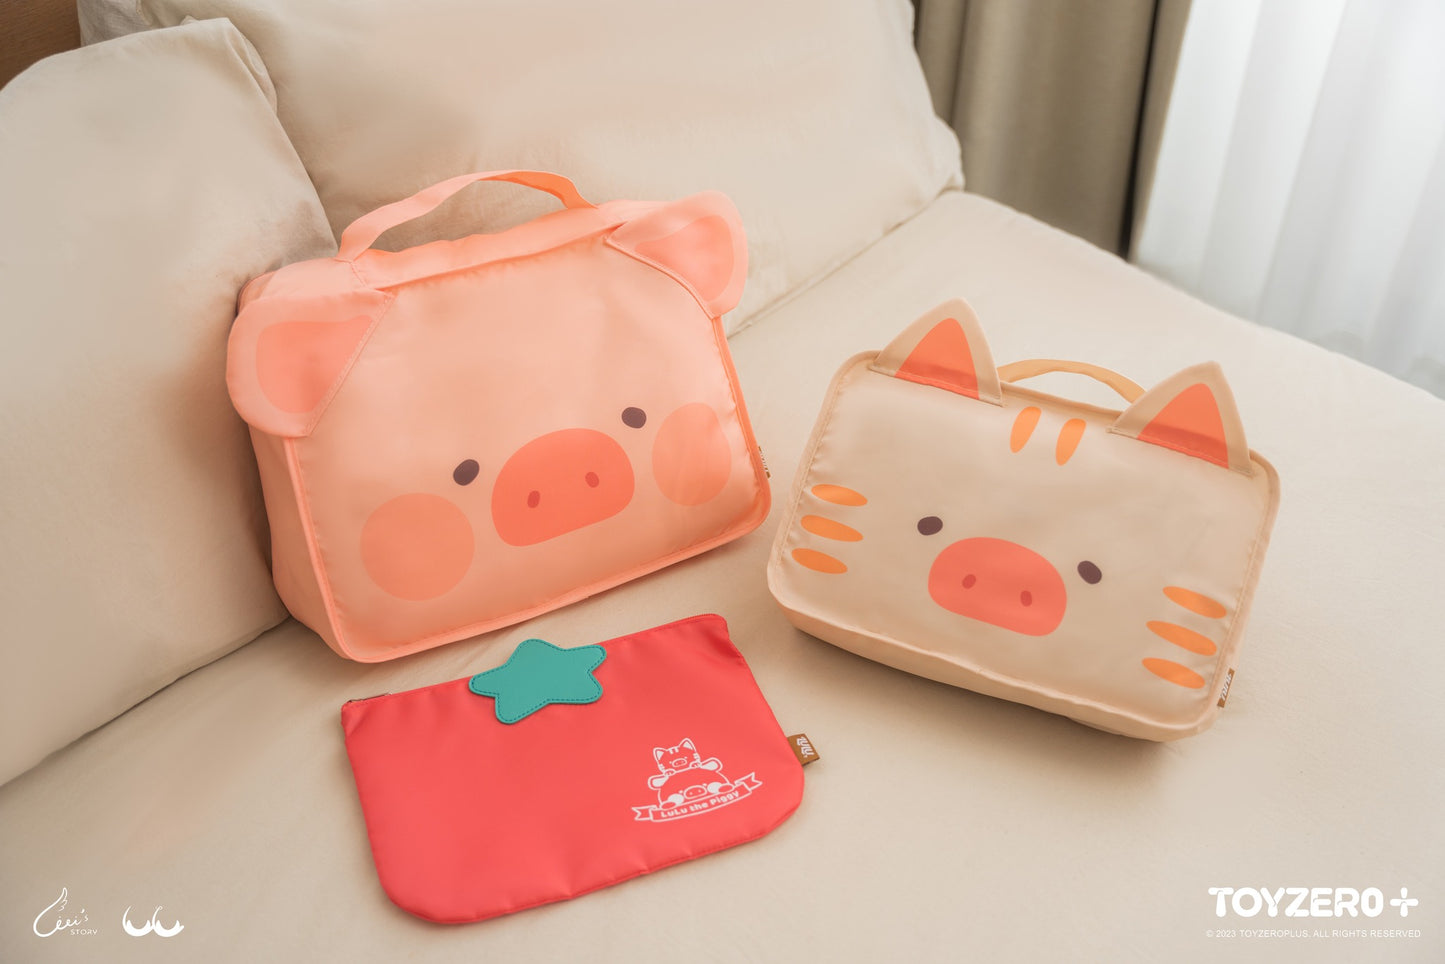 LuLu The Piggy Caturday - Clothes Bag 罐頭豬LuLu 豬咪日常 - 收納袋套裝